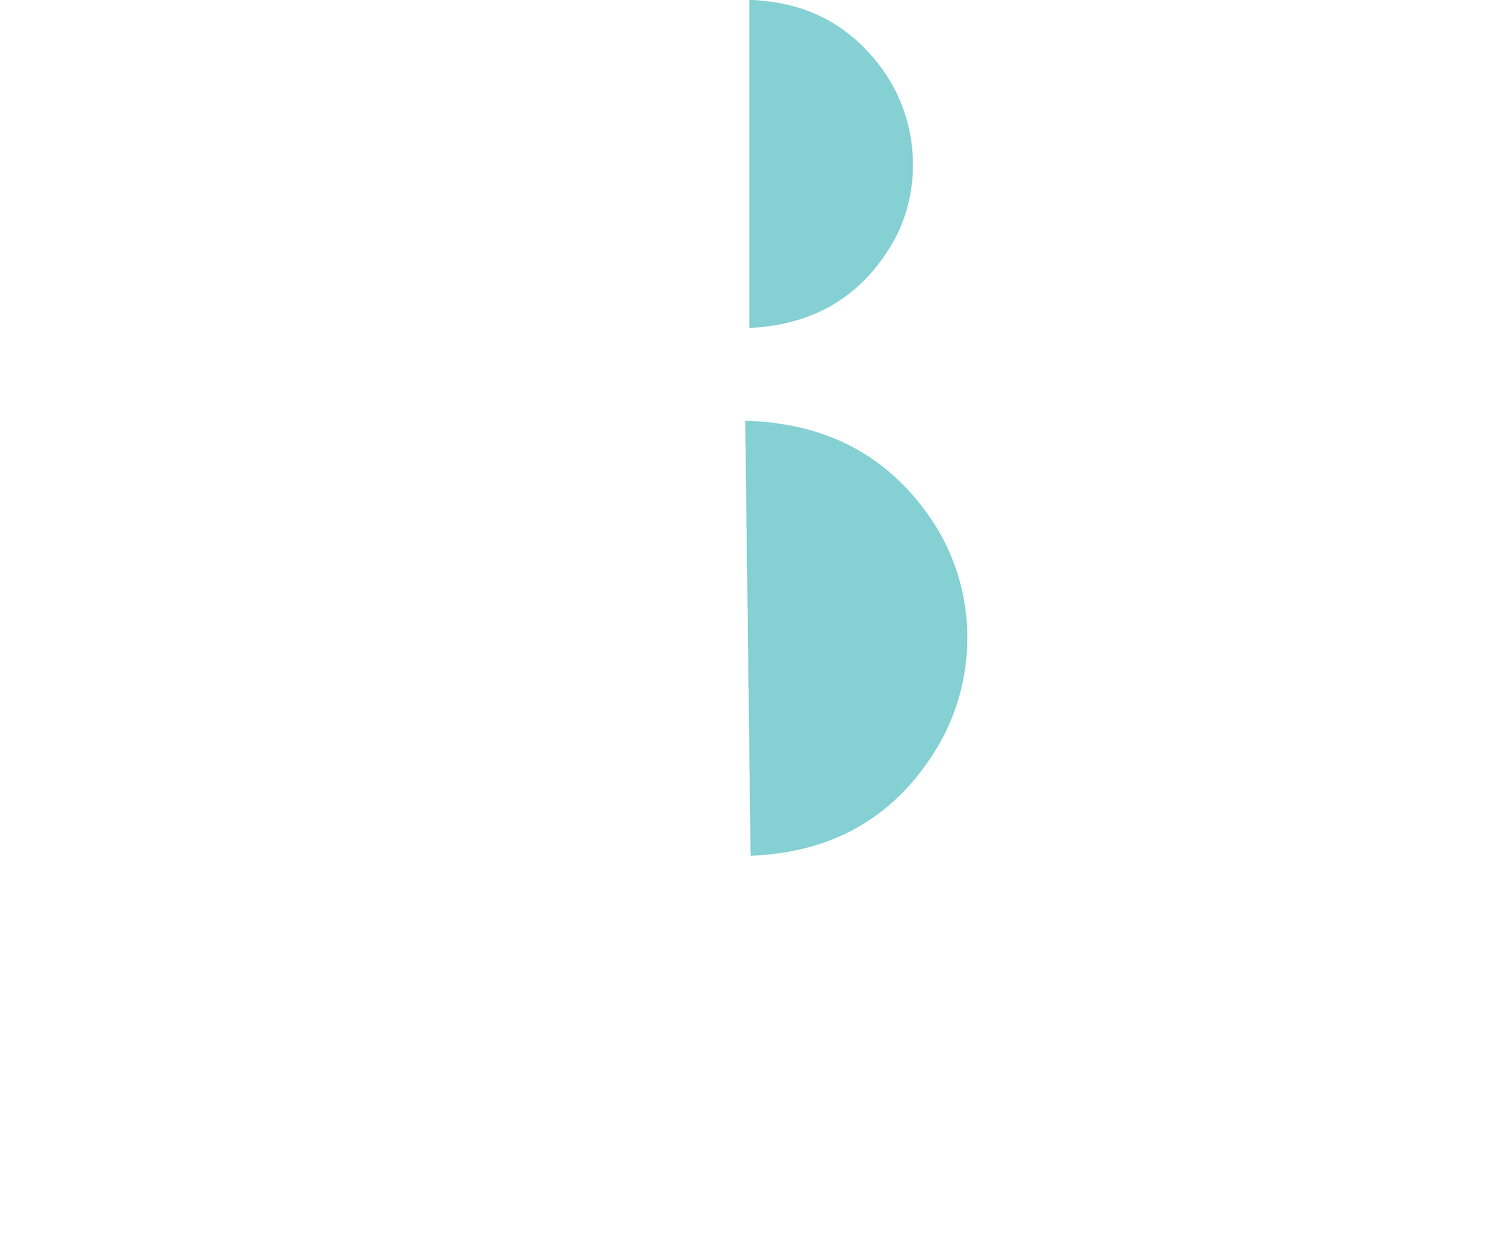 Project 8B